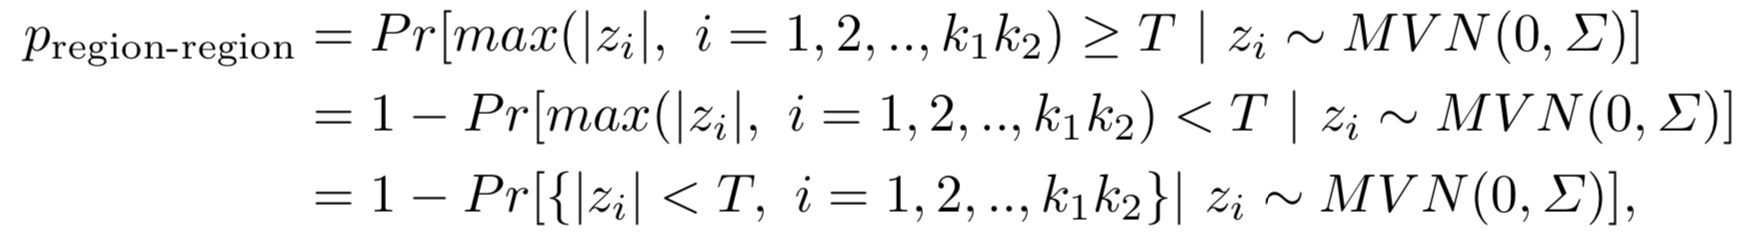 Equation2